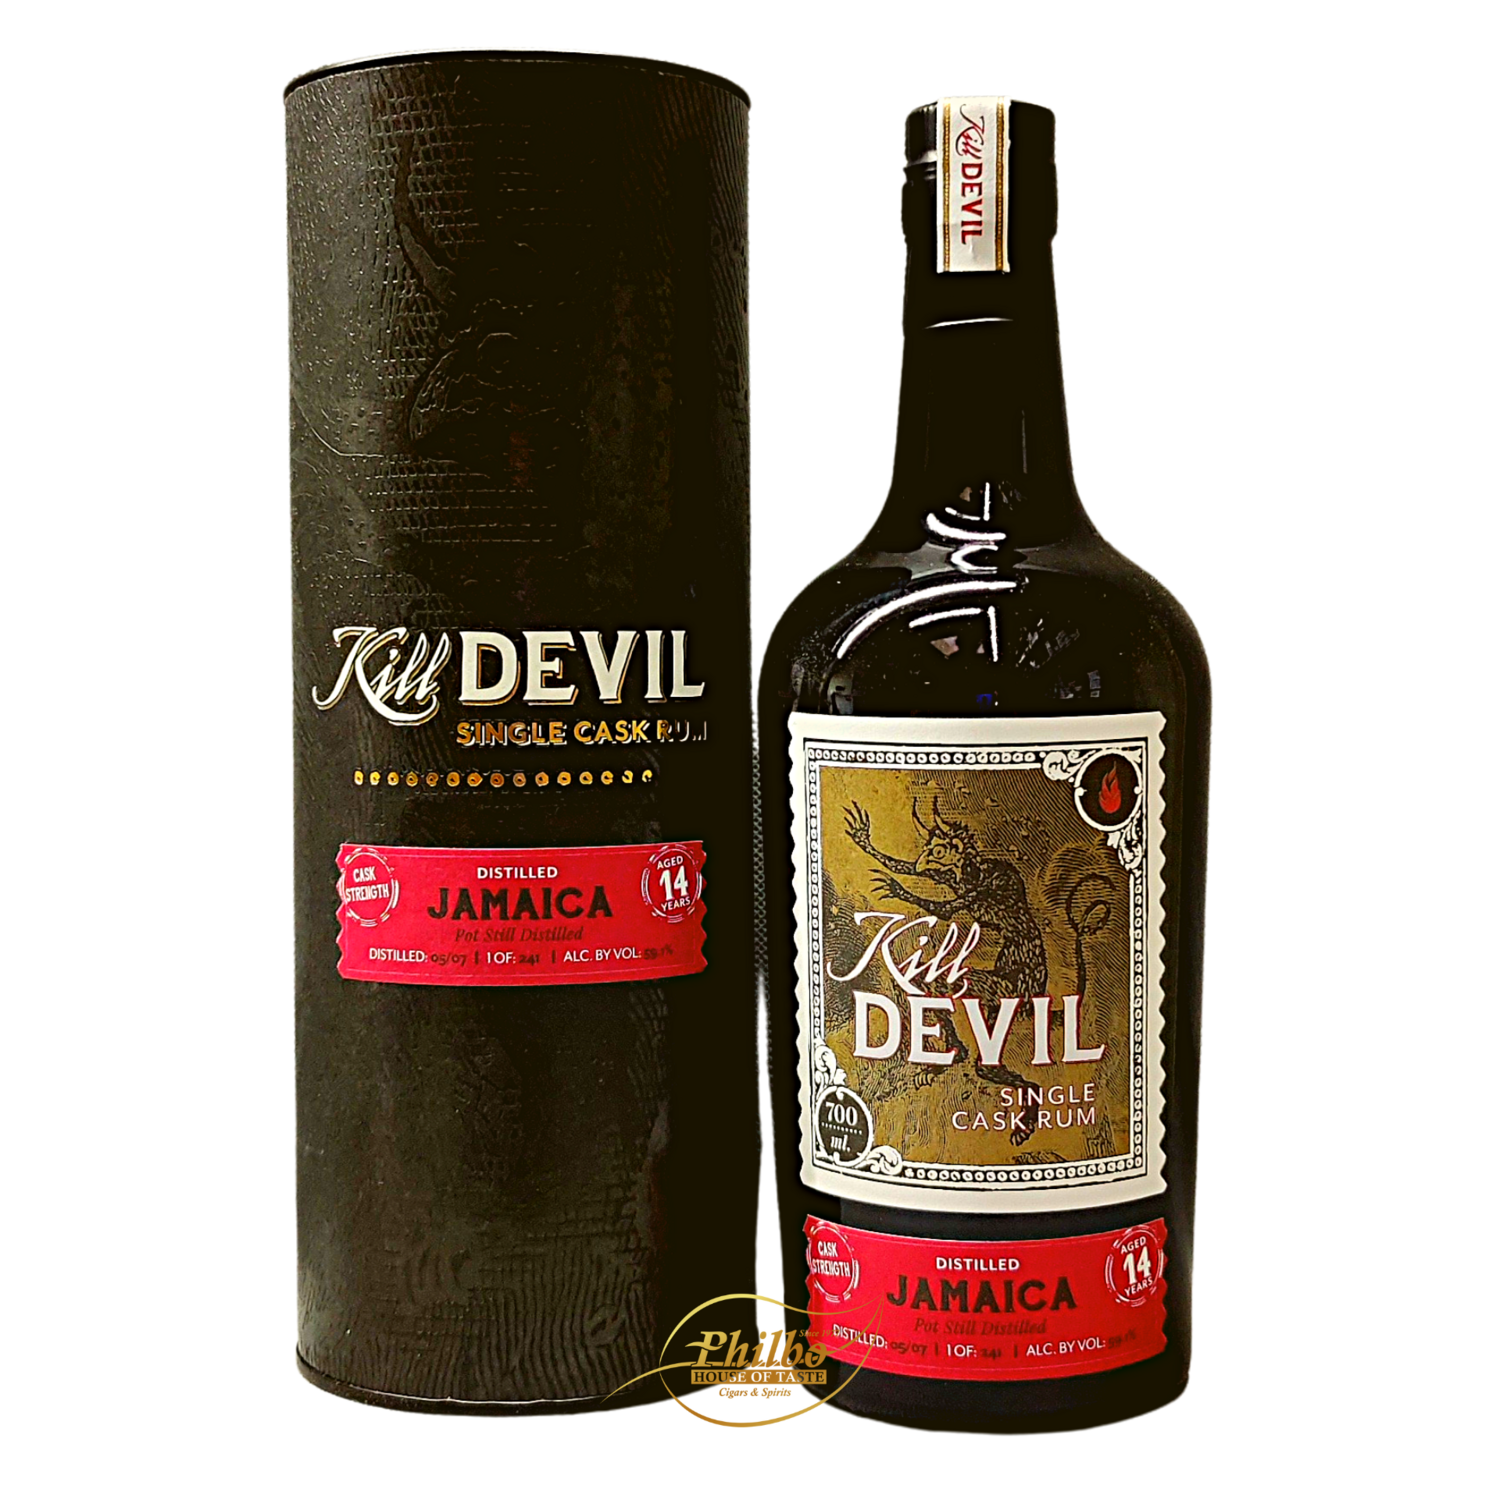 Kill Devil Jamaica Worthy Park 14y Single Cask strength 59,1% 241 bottles